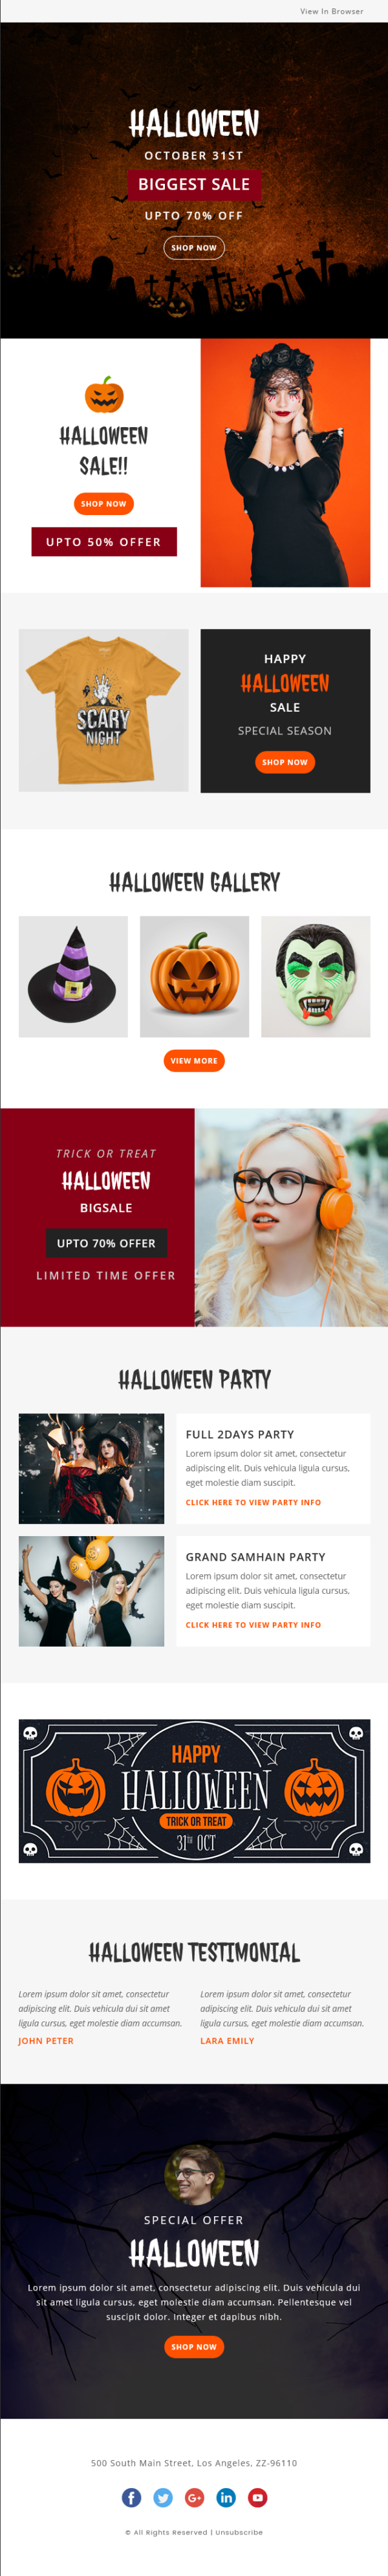 Halloween - Multipurpose Responsive Email Template